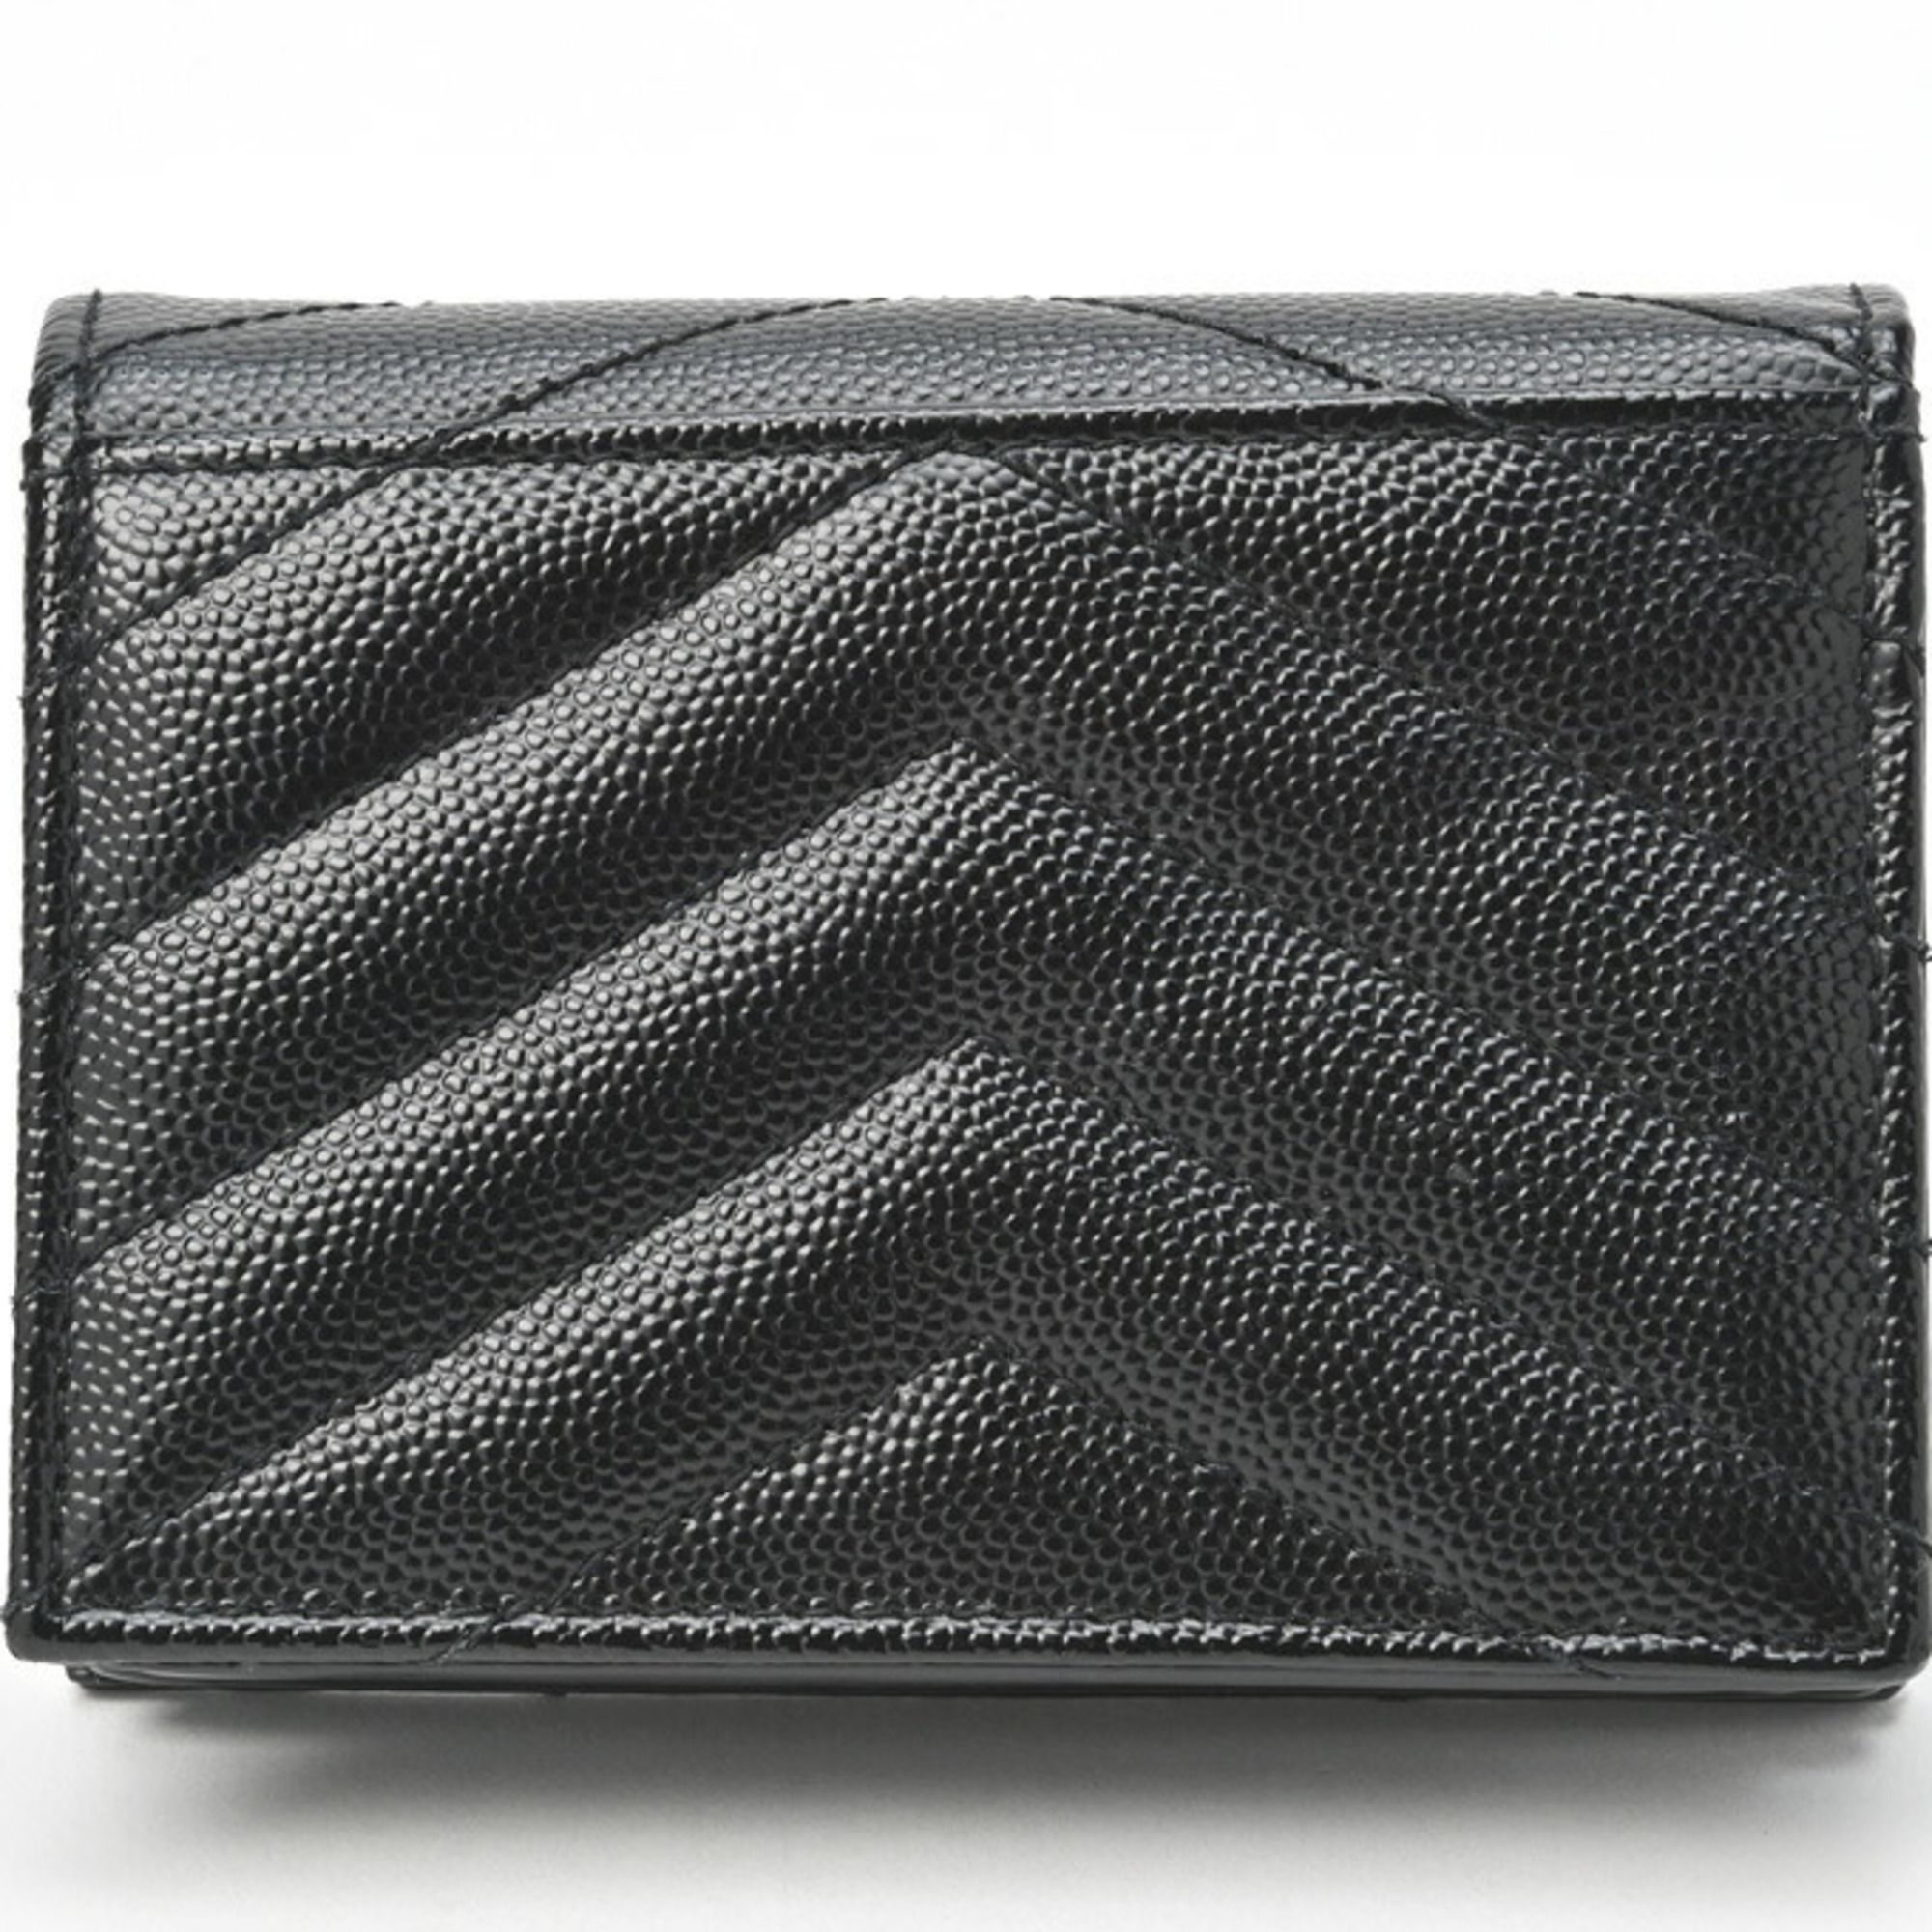 Saint Laurent Monogram Wallet 668290 Grained Poudre Embossed Leather